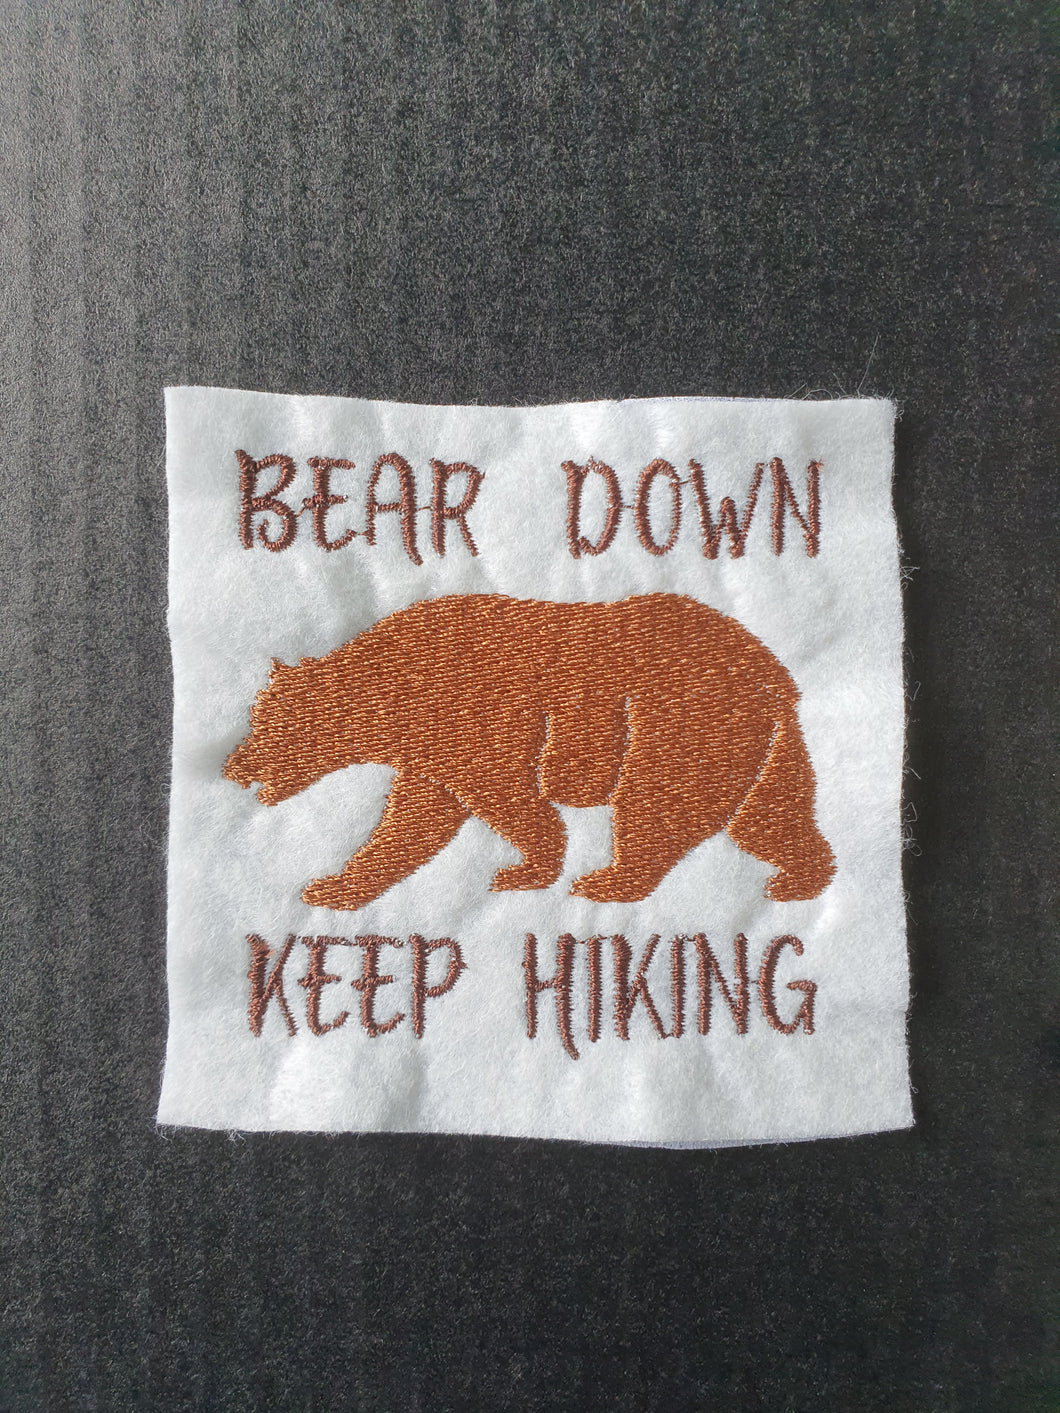 Funny motivational hiking embroidery designs - Bear down and keep hiking-Kraftygraphy